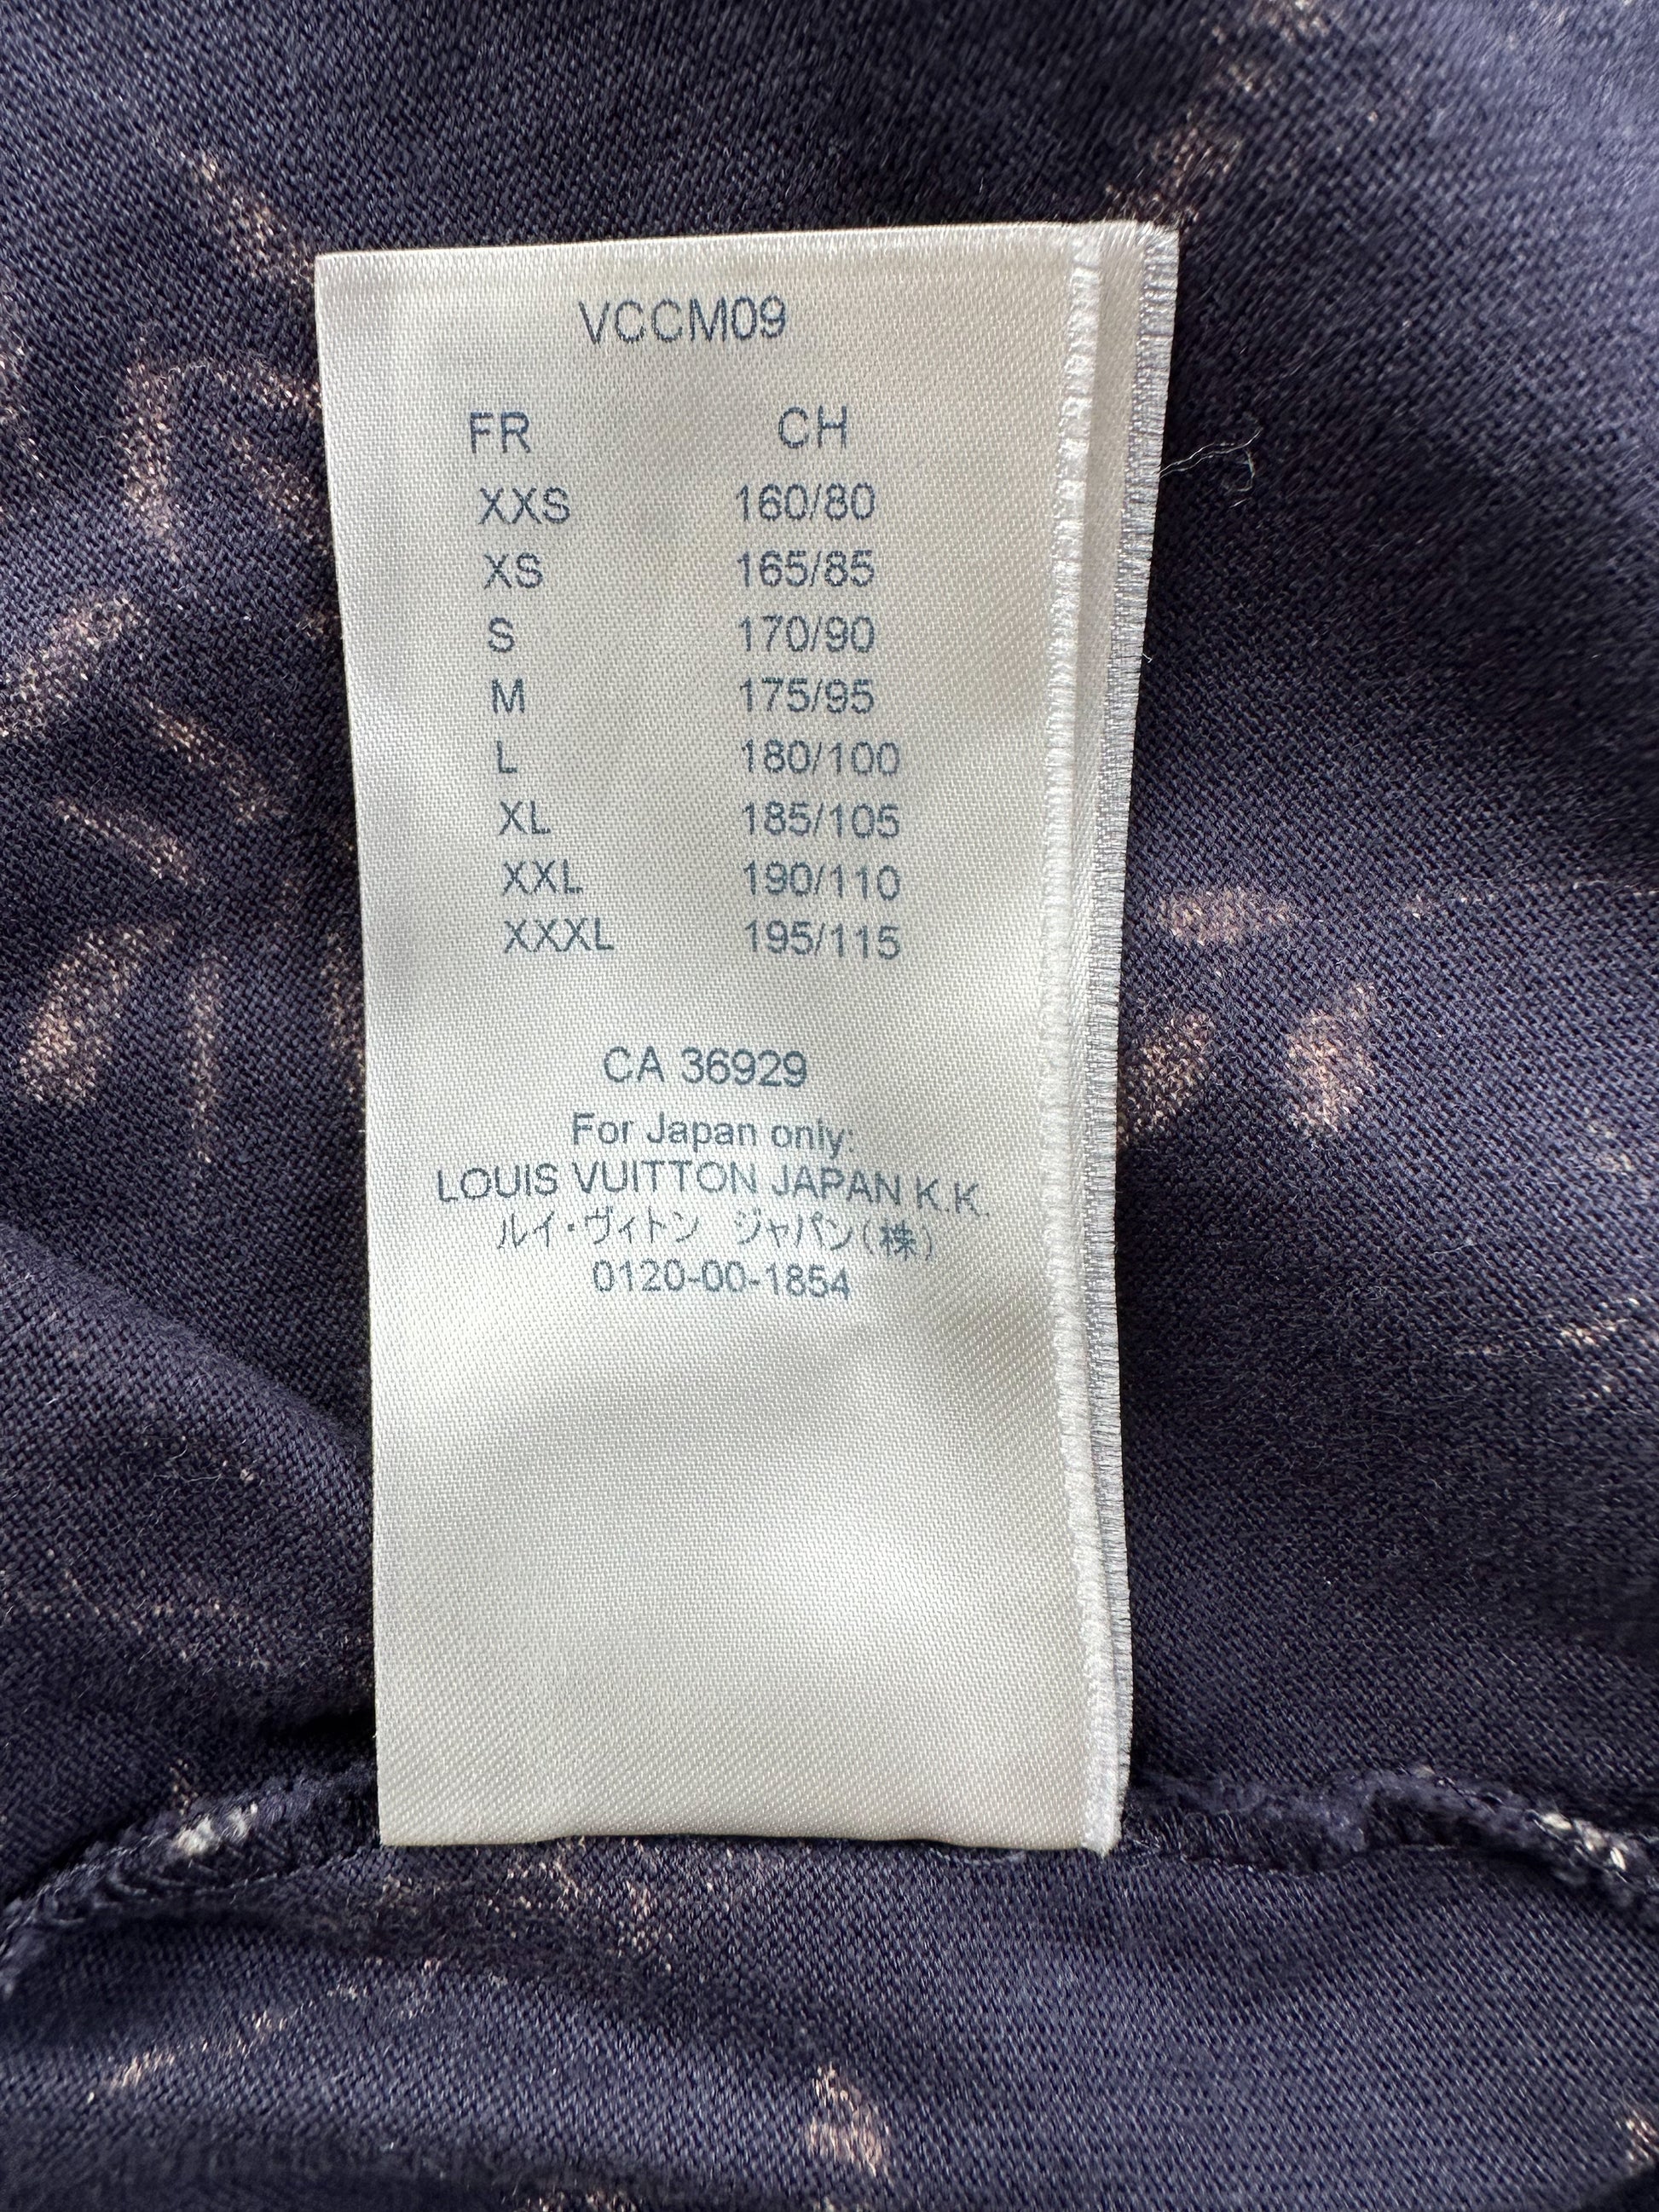 Louis Vuitton Navy LV Leaf Print T-Shirt